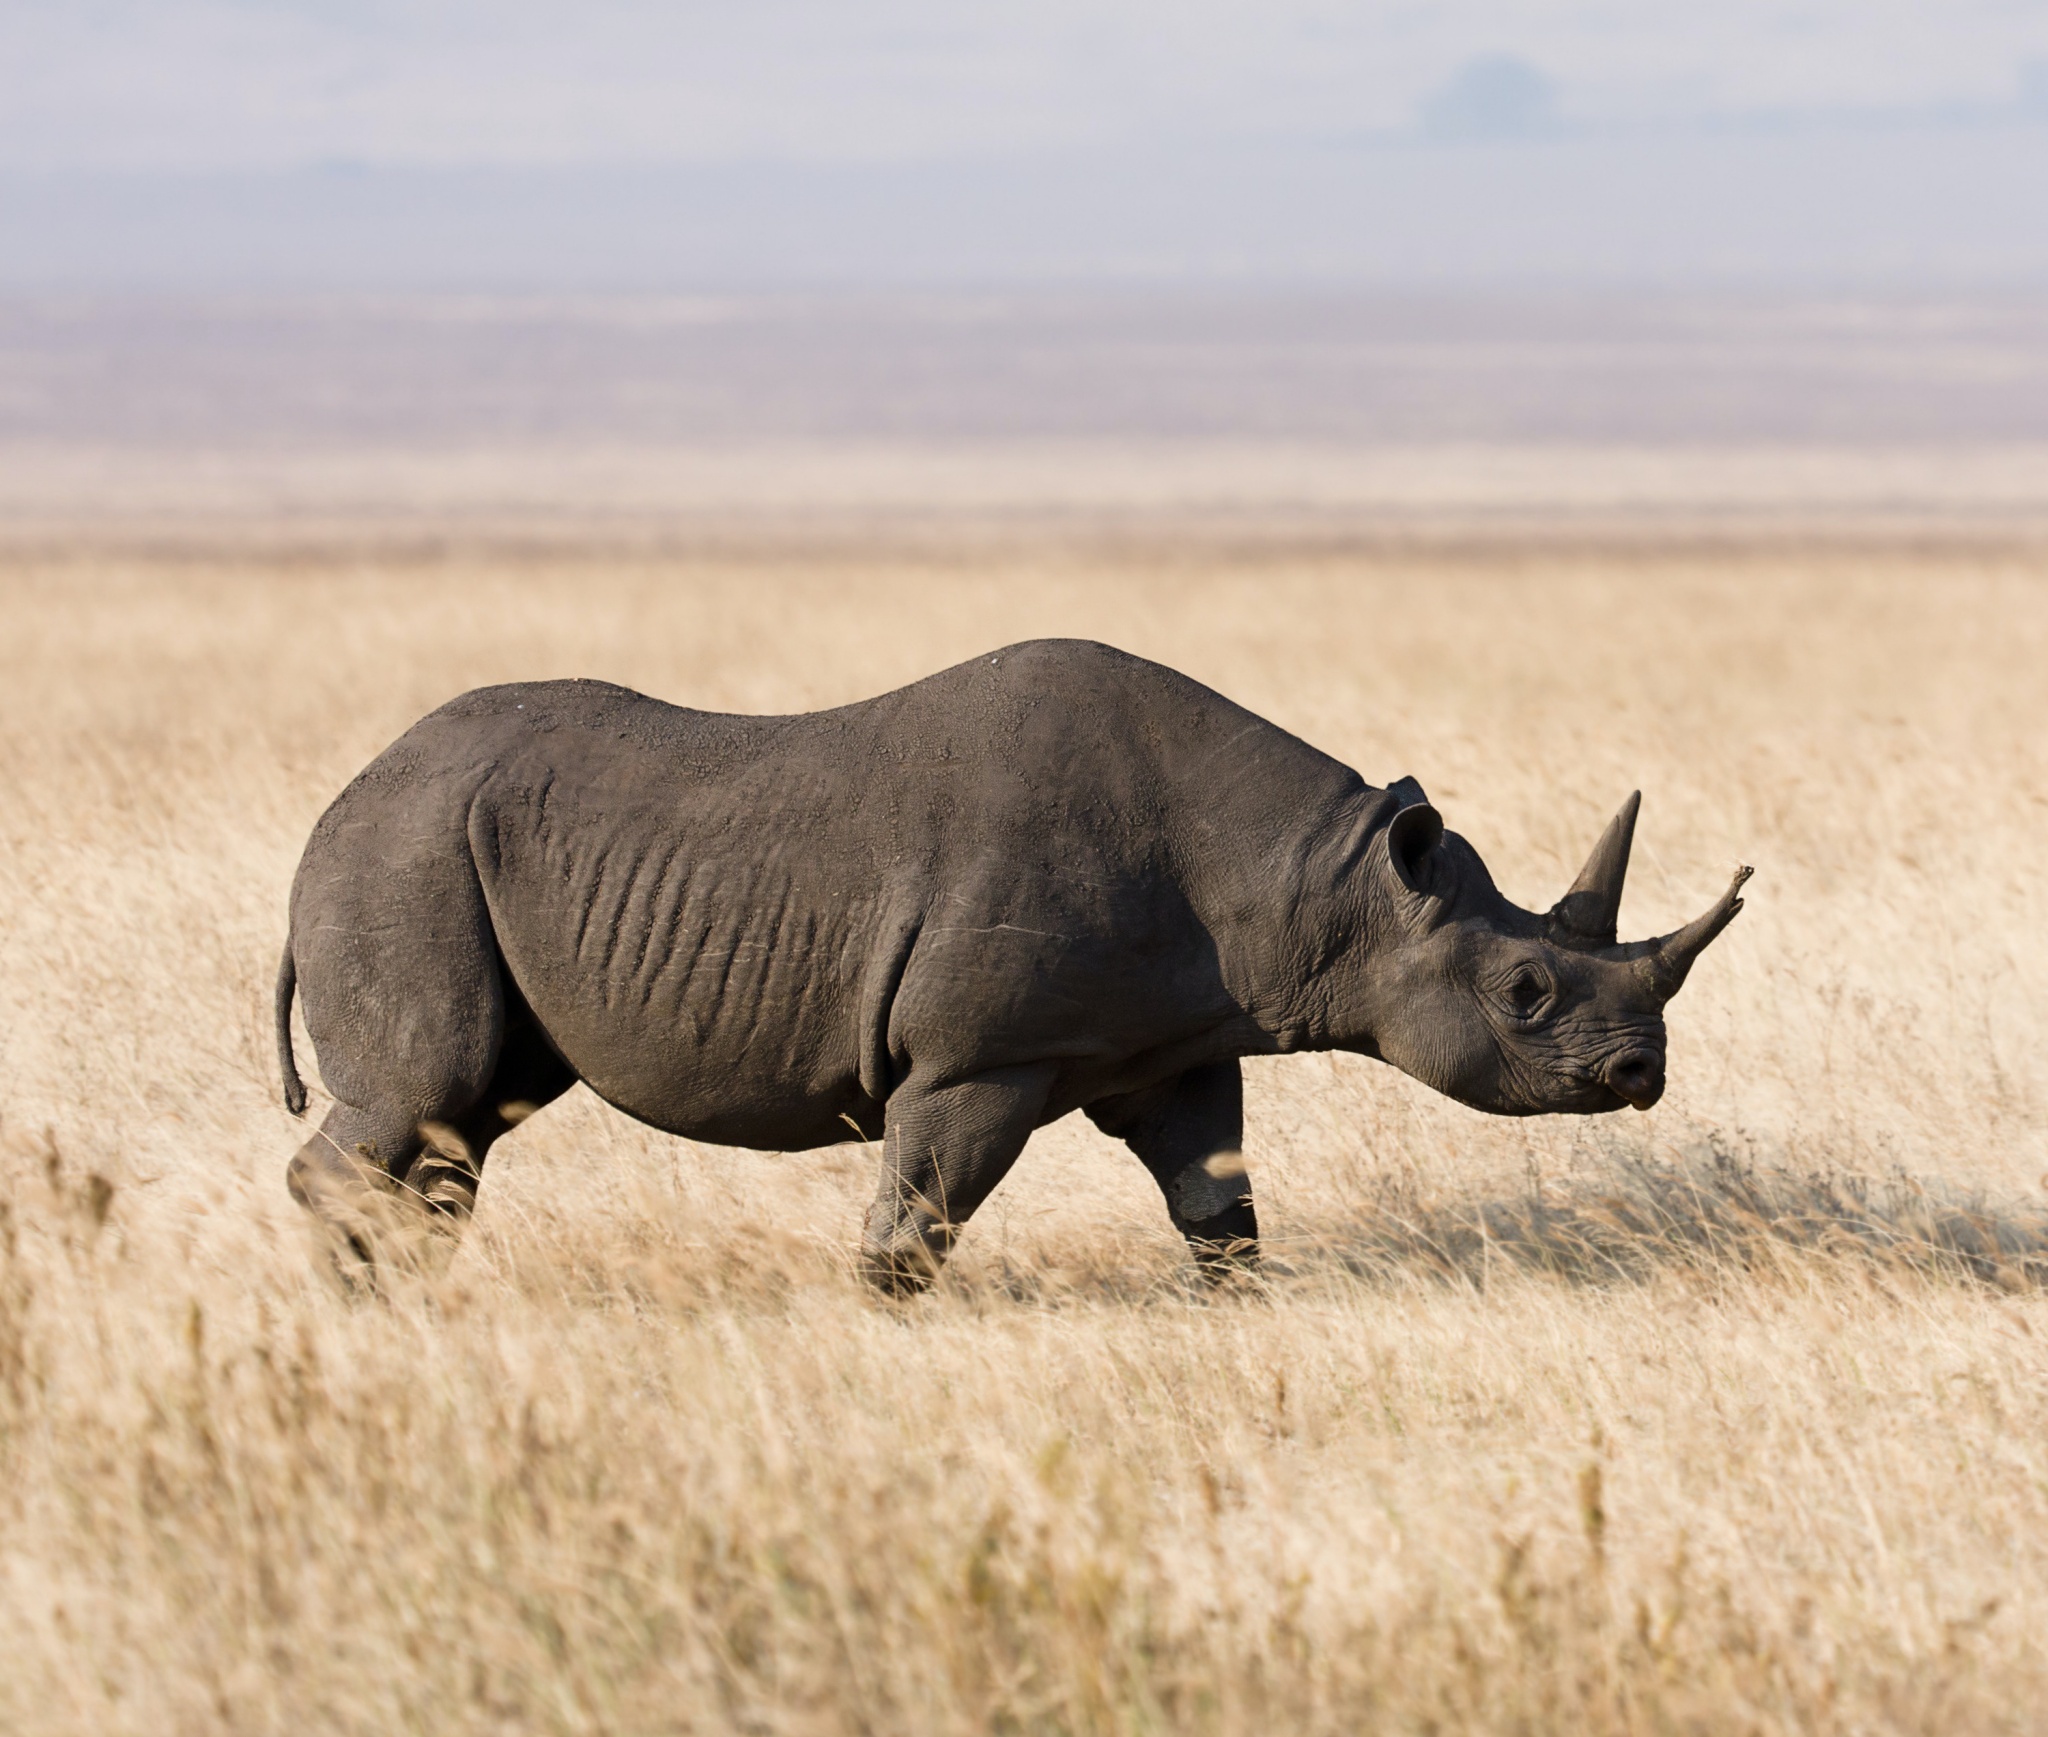 black-rhino.jpg